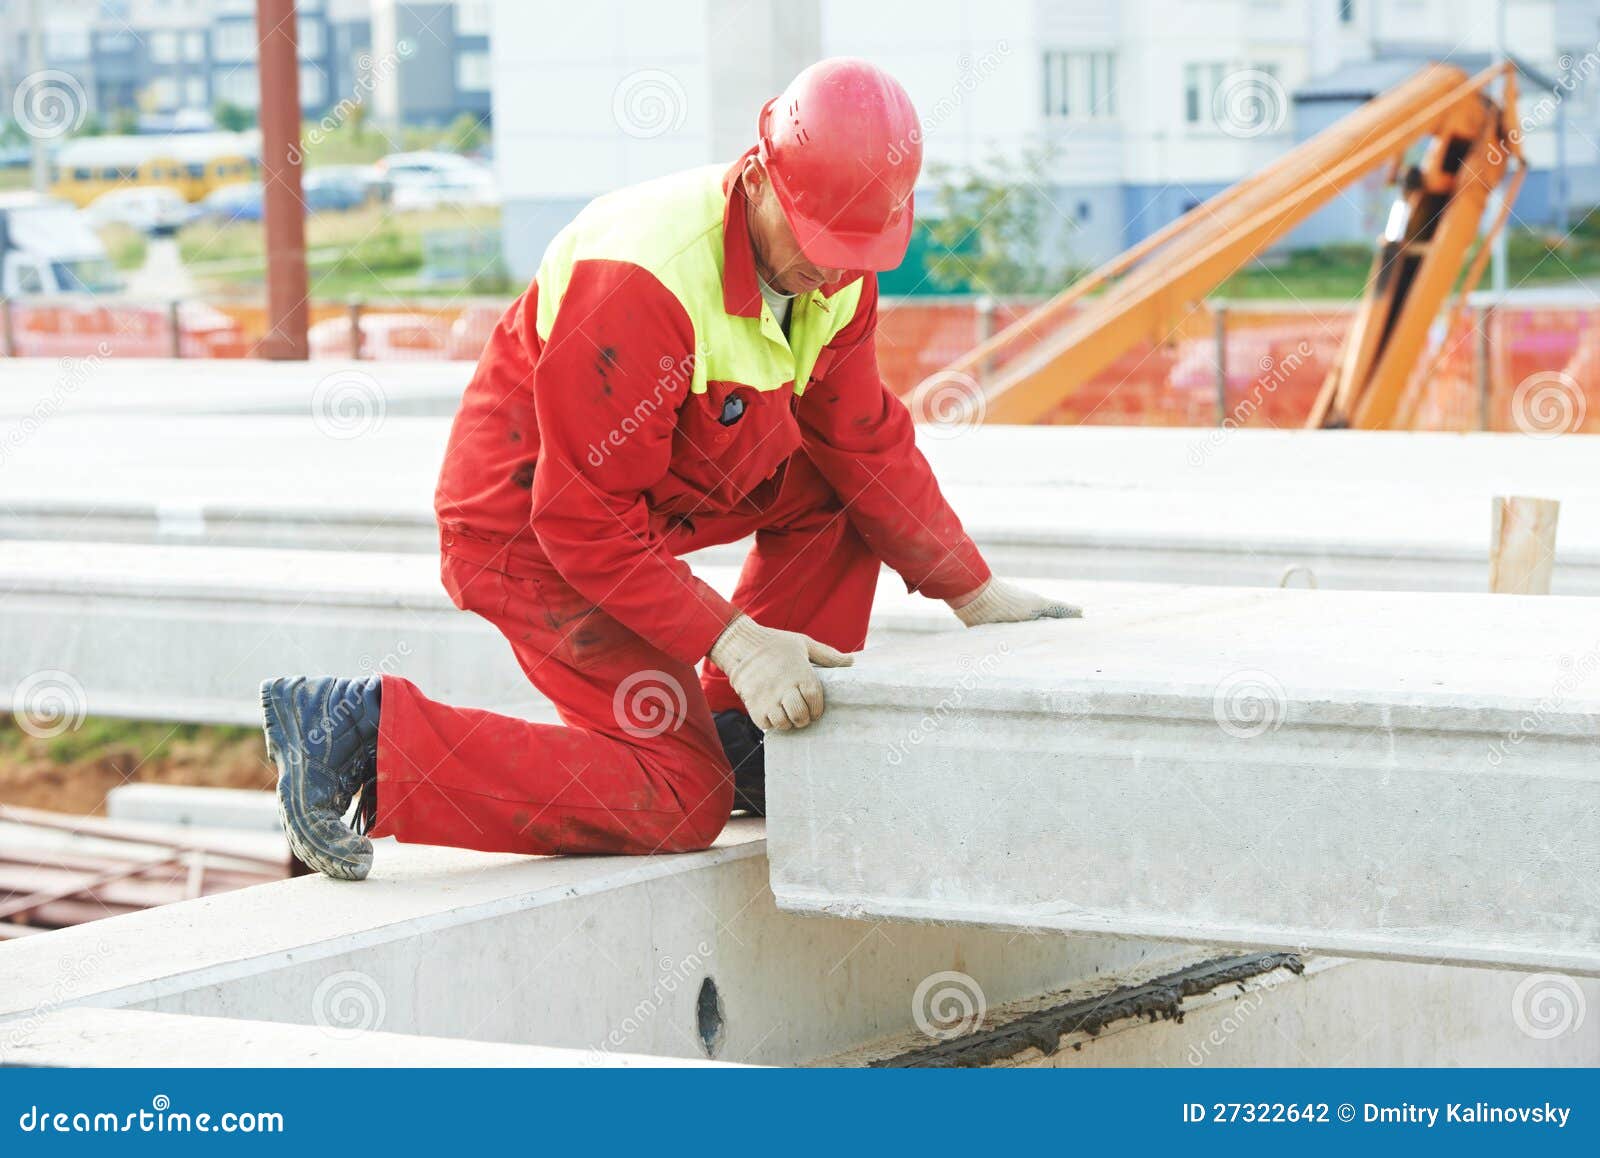 Builder Worker Installing Concrete Slab Stock Photo - Image of